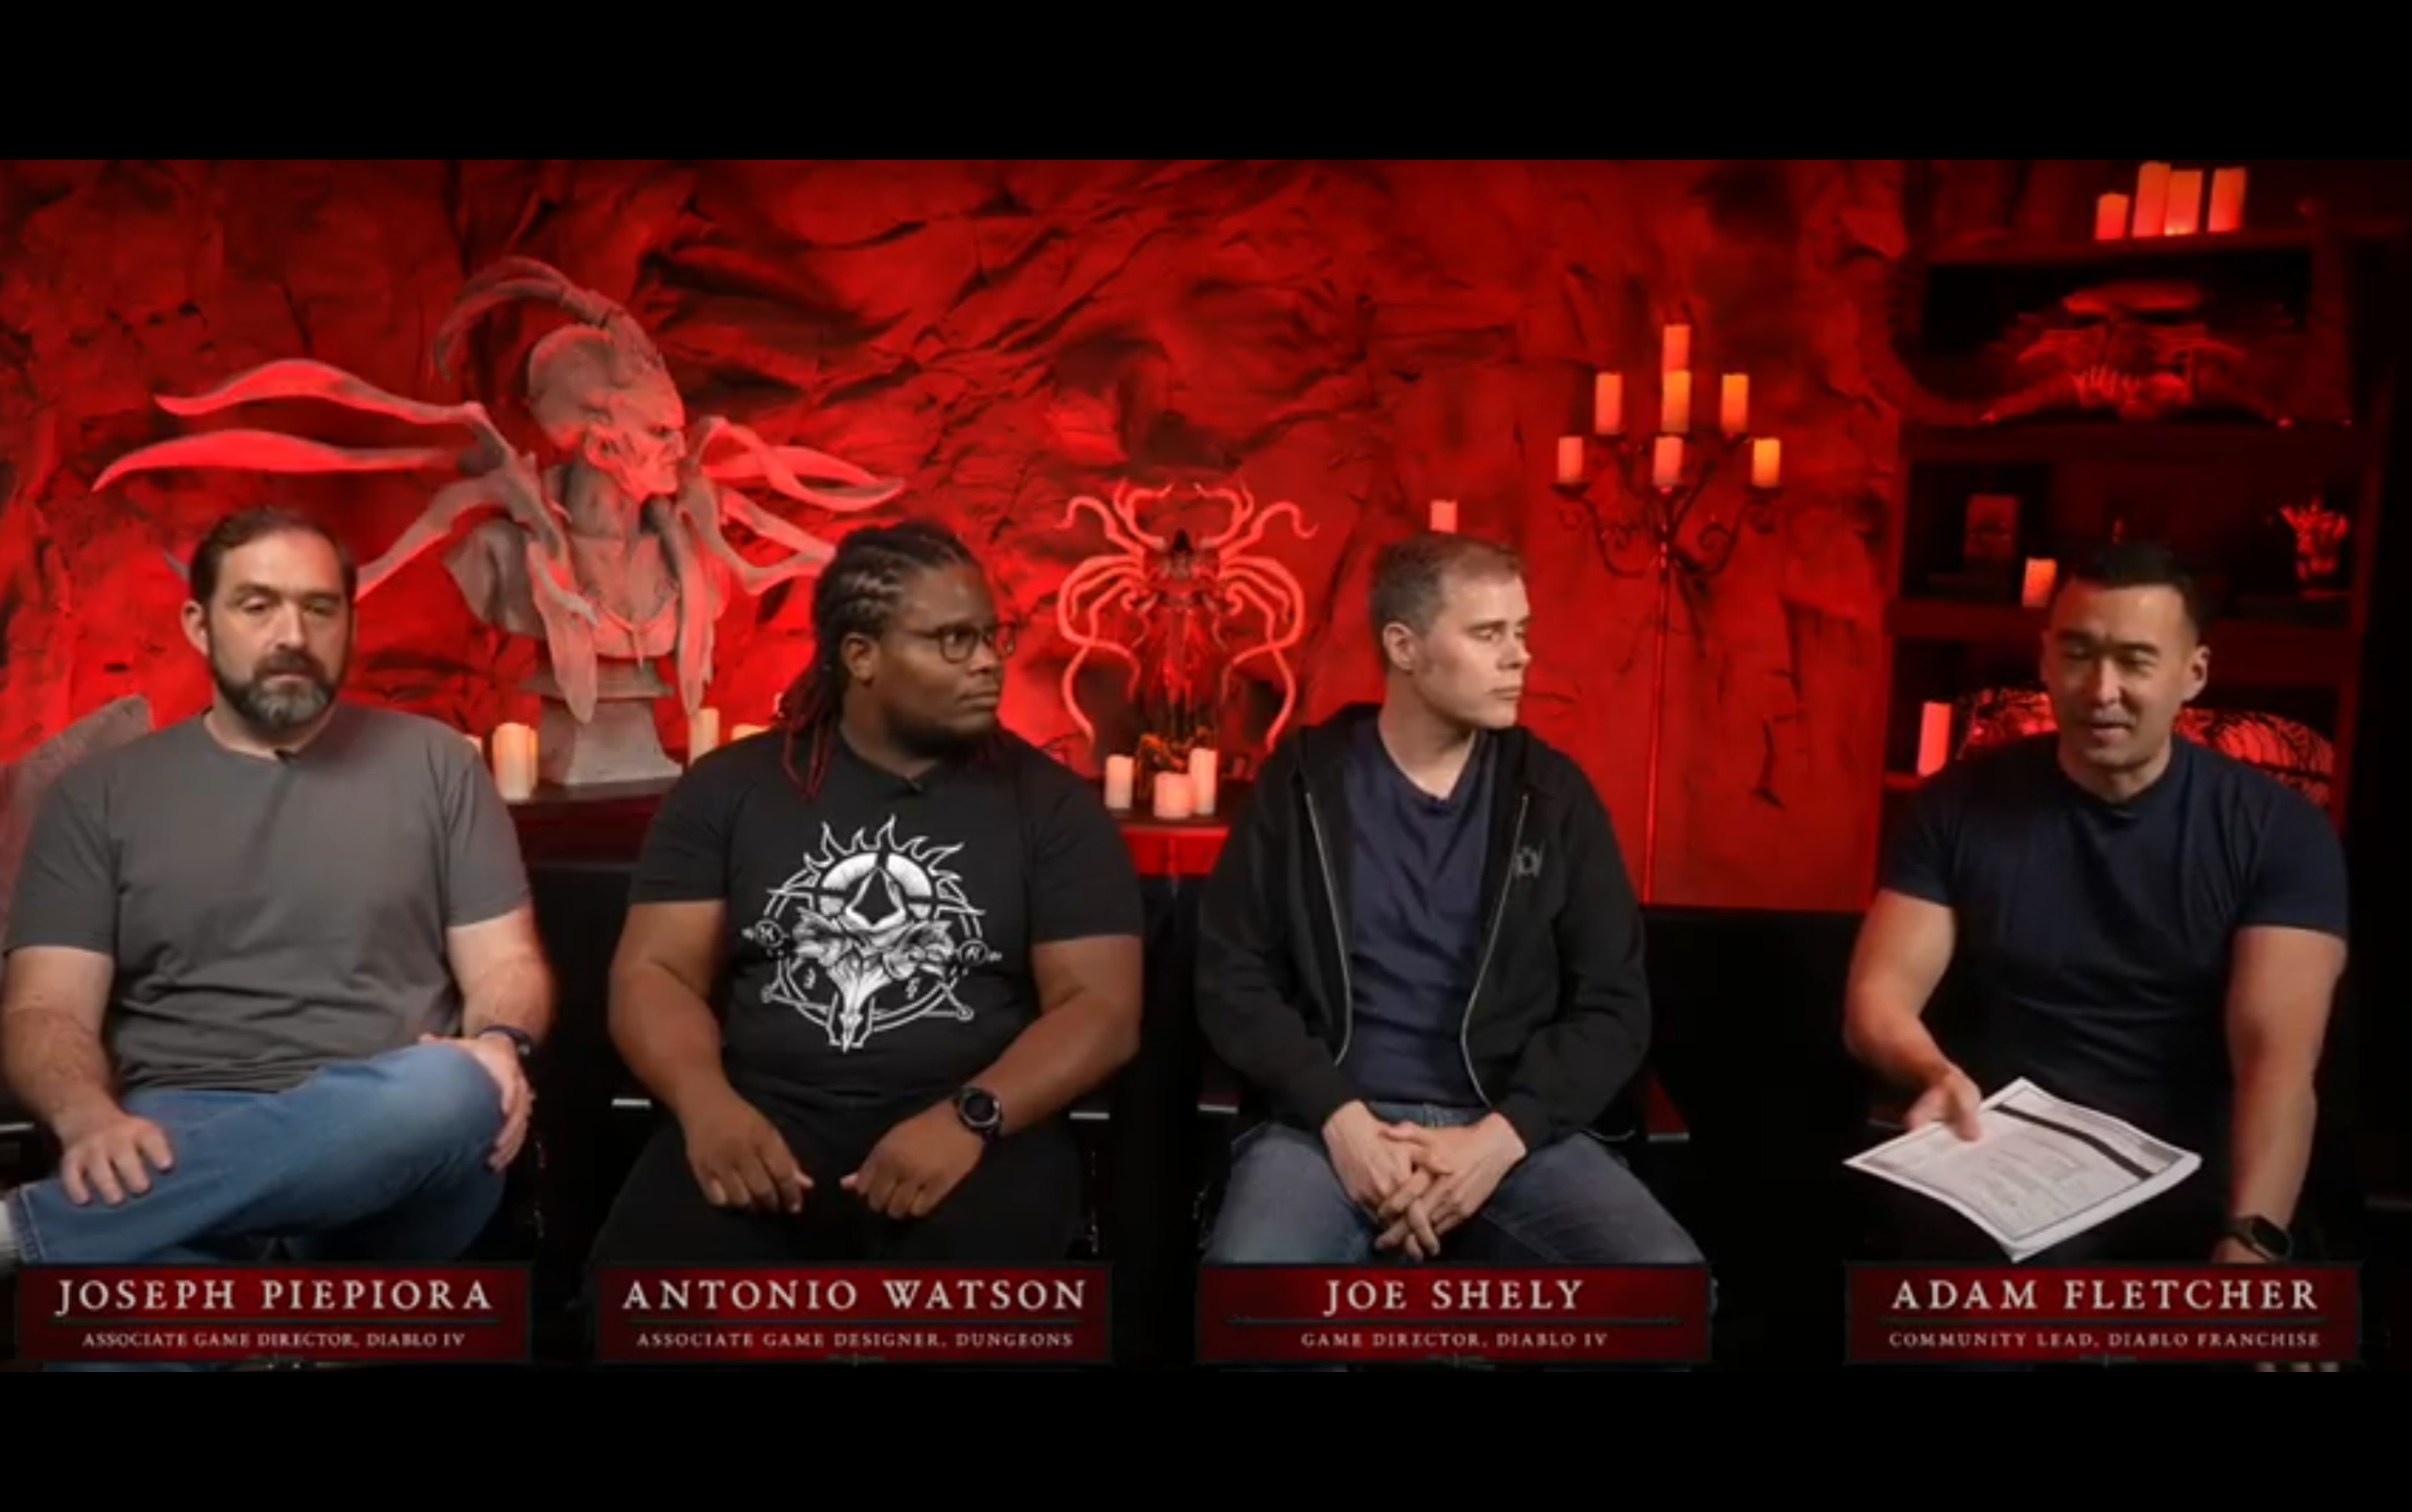 Diablo Developer Livestream Recap - Season of the Malignant, Blood